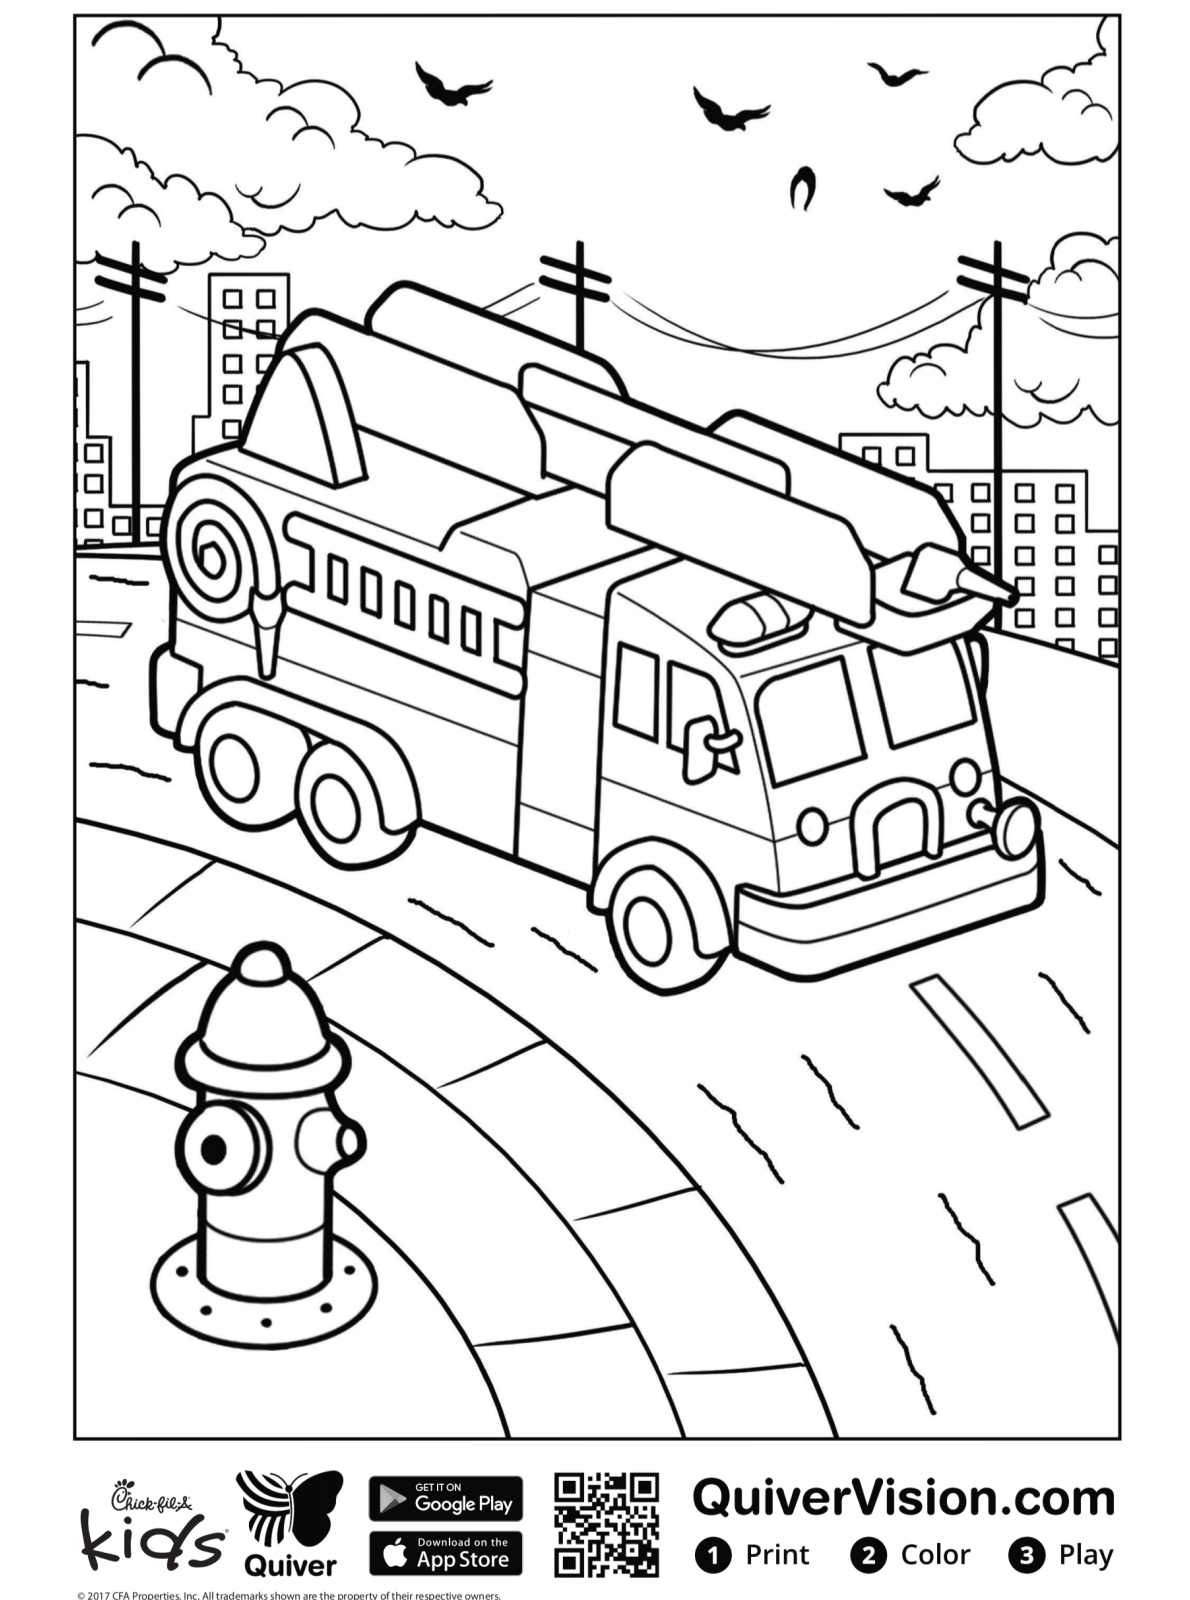 Kids-n-fun.com | Coloring page Quiver fire brigade